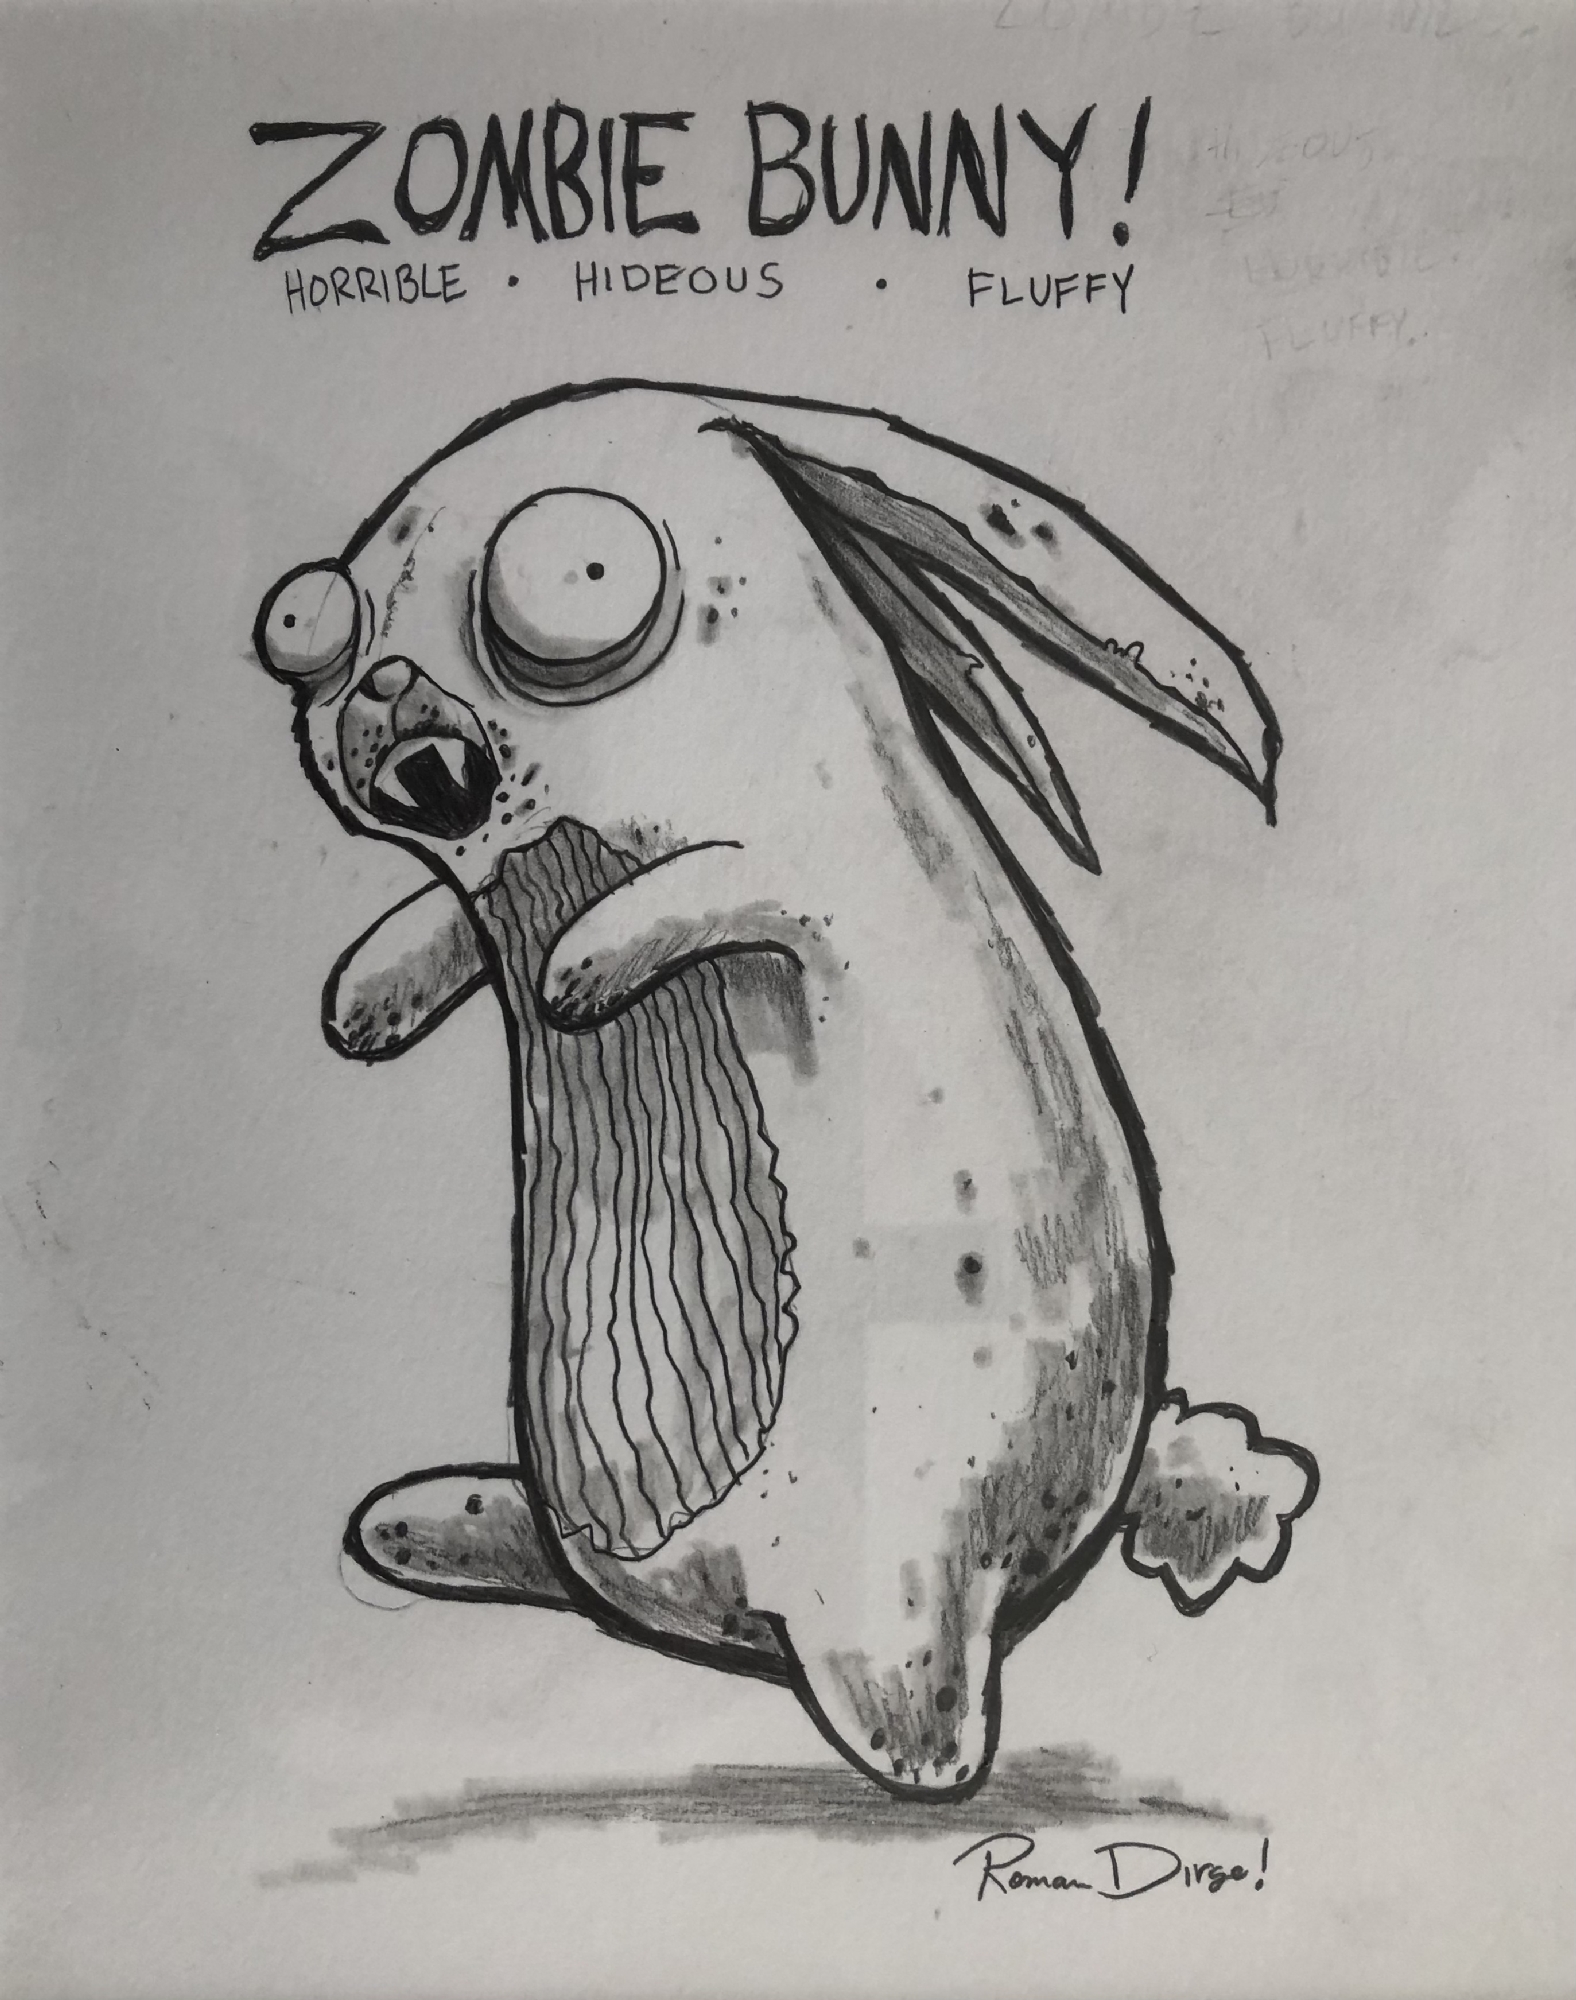 Roman Dirge - Zombie Bunny, in Daniel Ashton's Sketches